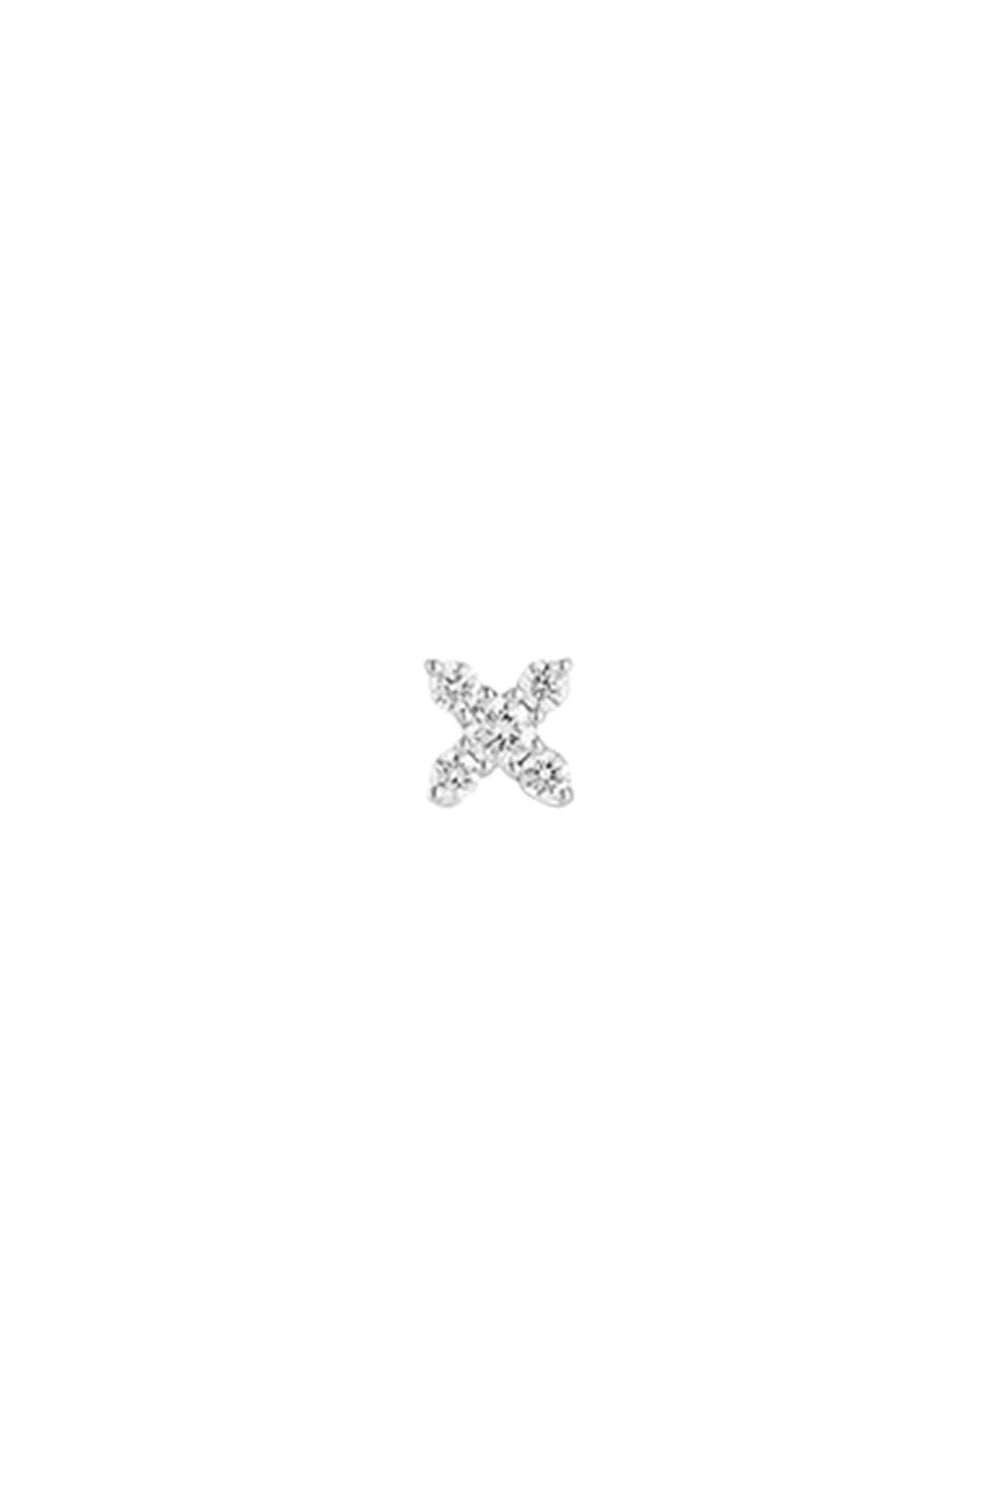 DANA REBECCA DESIGNS-Ava Bea X Single Stud Earring-WHITE GOLD